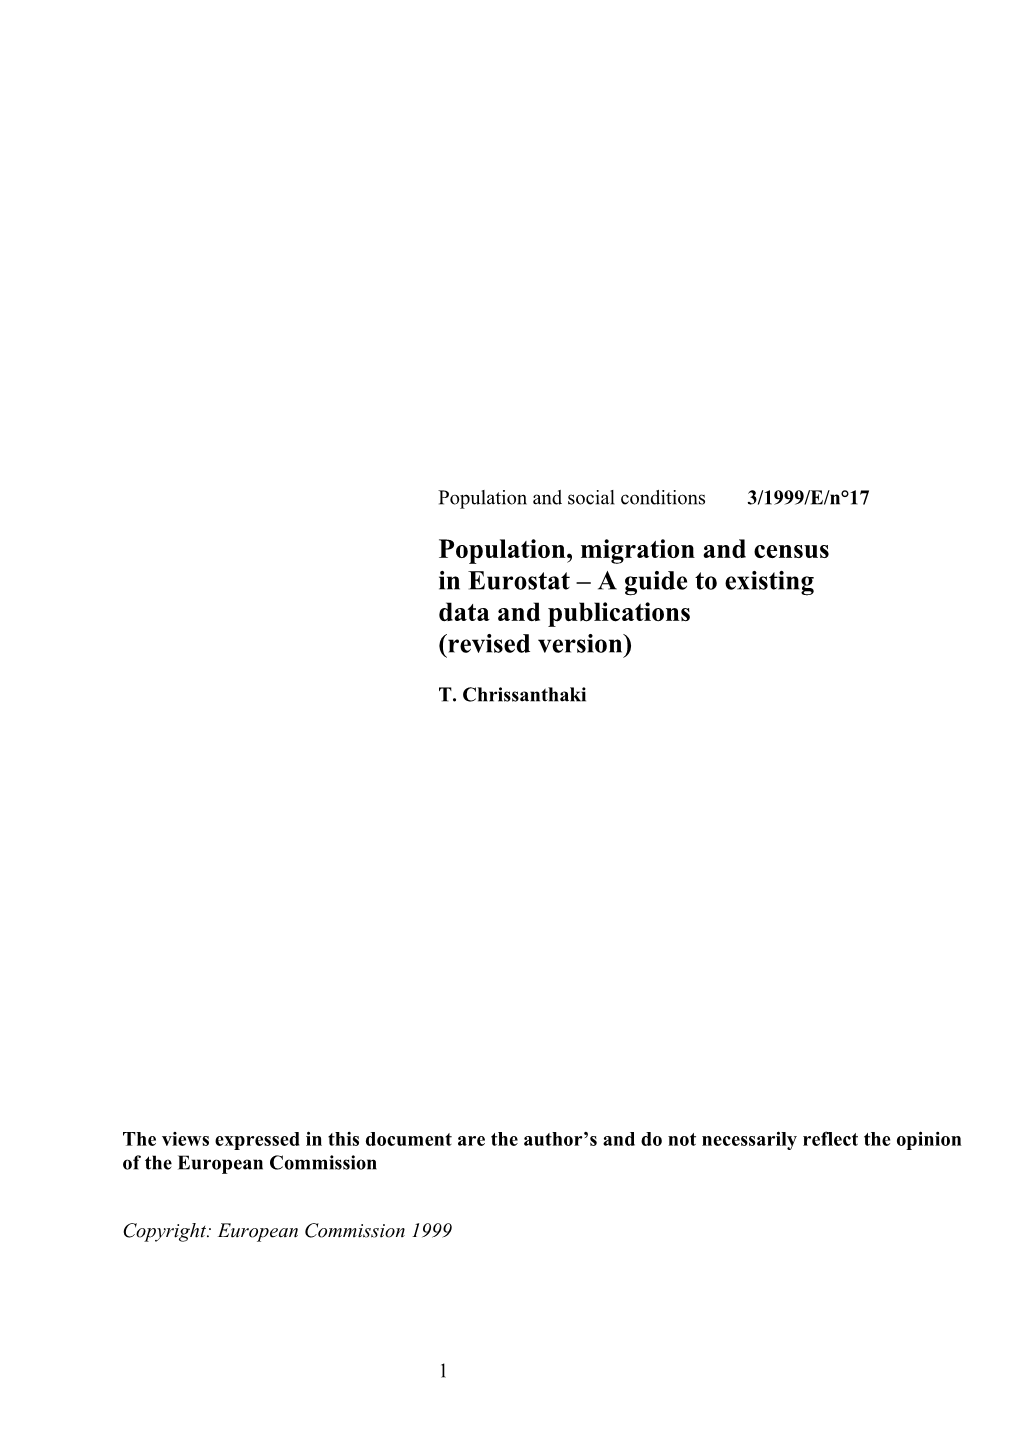 Population, Migration and Census in Eurostat